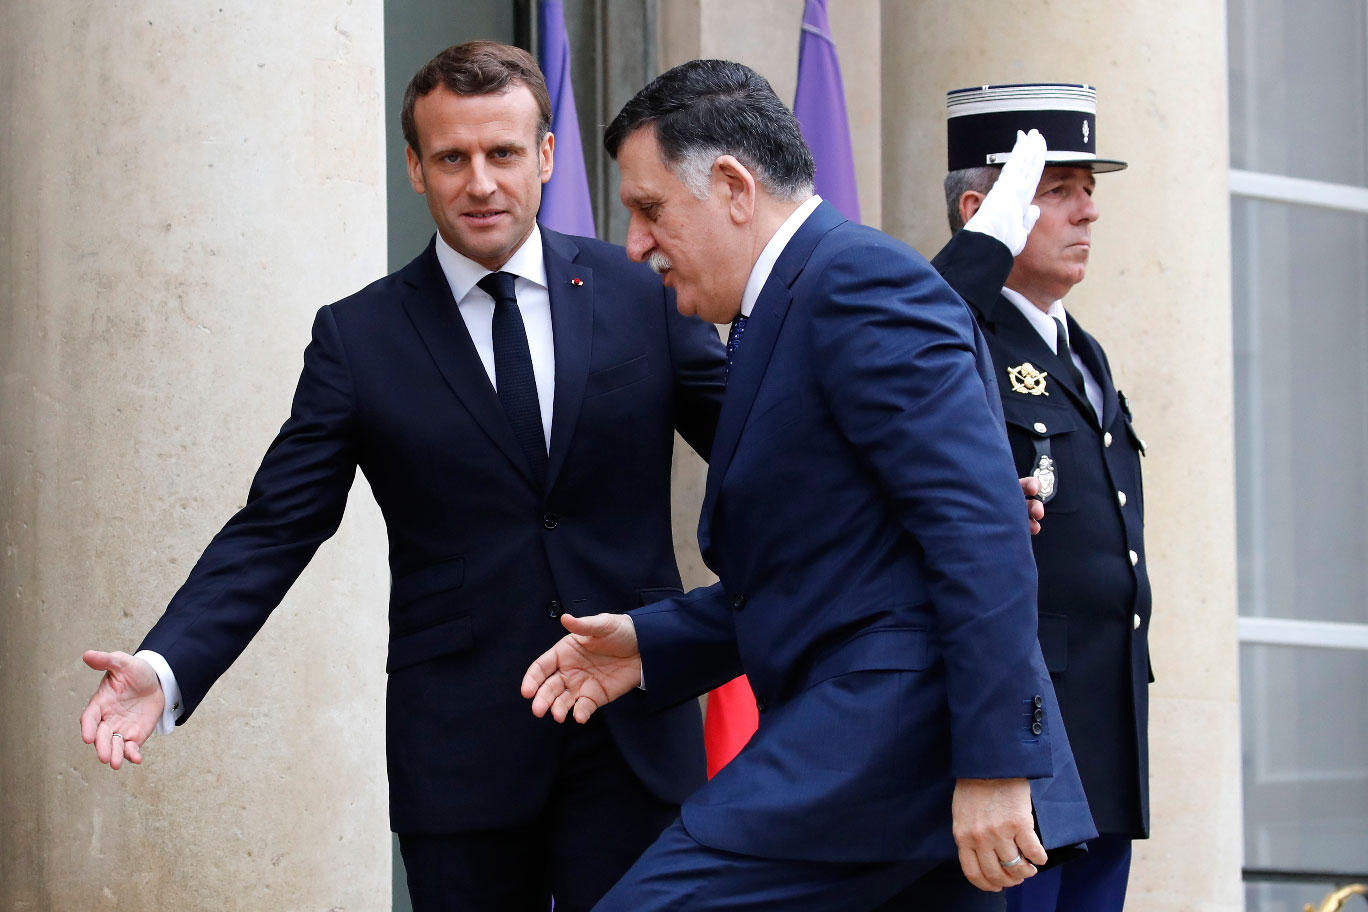 French President Emmanuel Macron (R) welcomes Libyan Prime Minister Fayez Sarraj